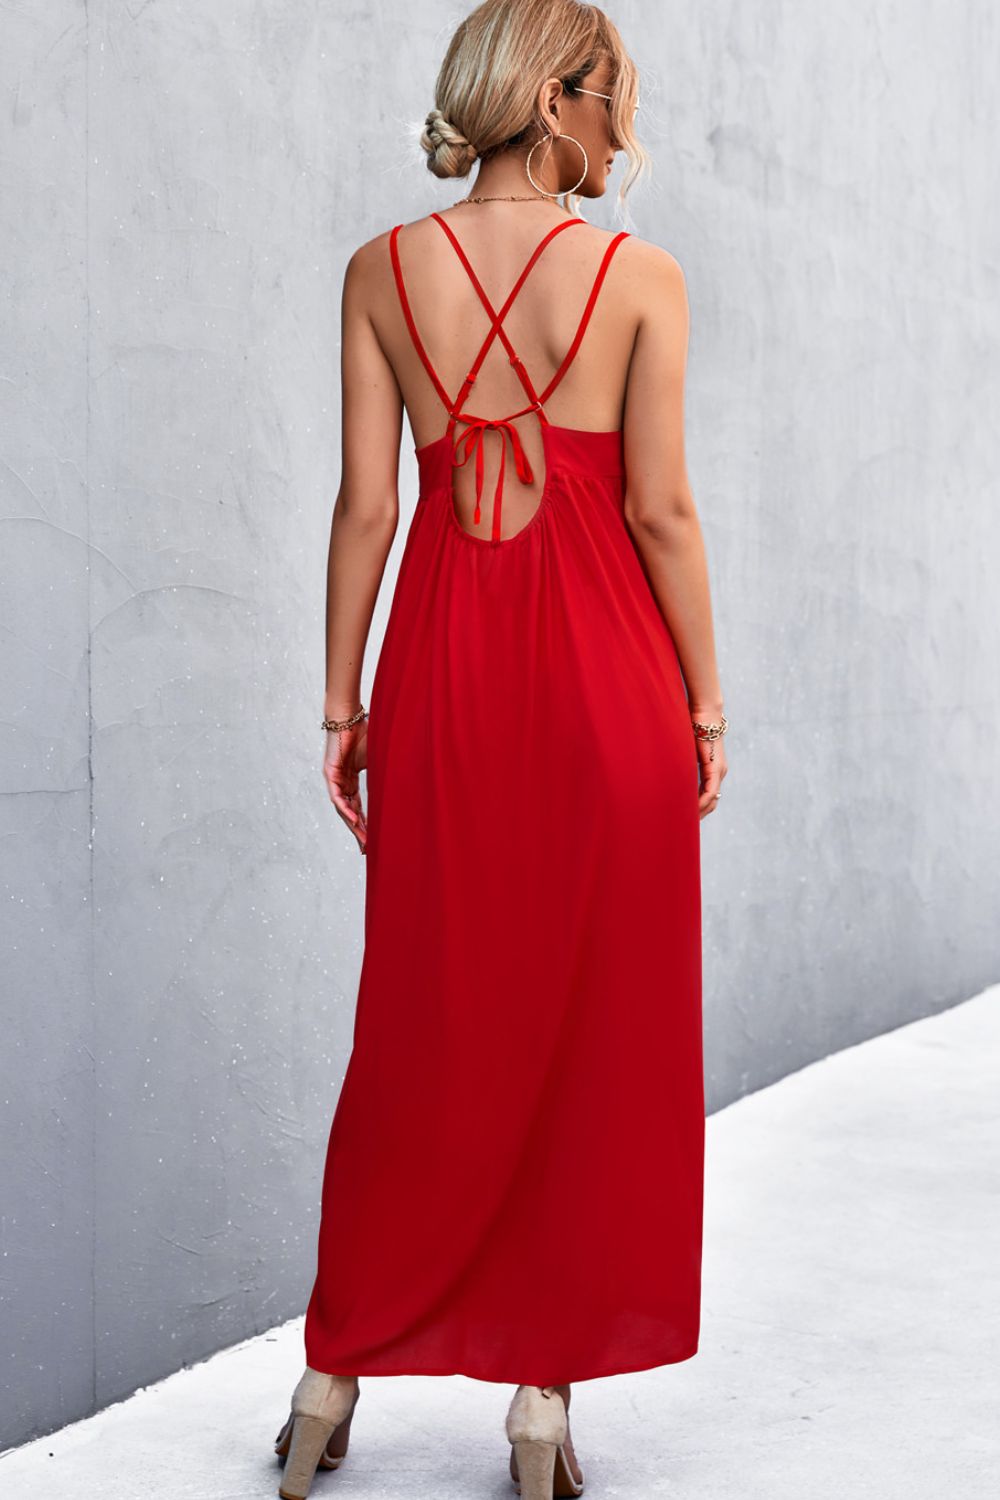 Parisian Chick Double Strap Tie Back Dress Dresses by Vim&Vigor | Vim&Vigor Boutique